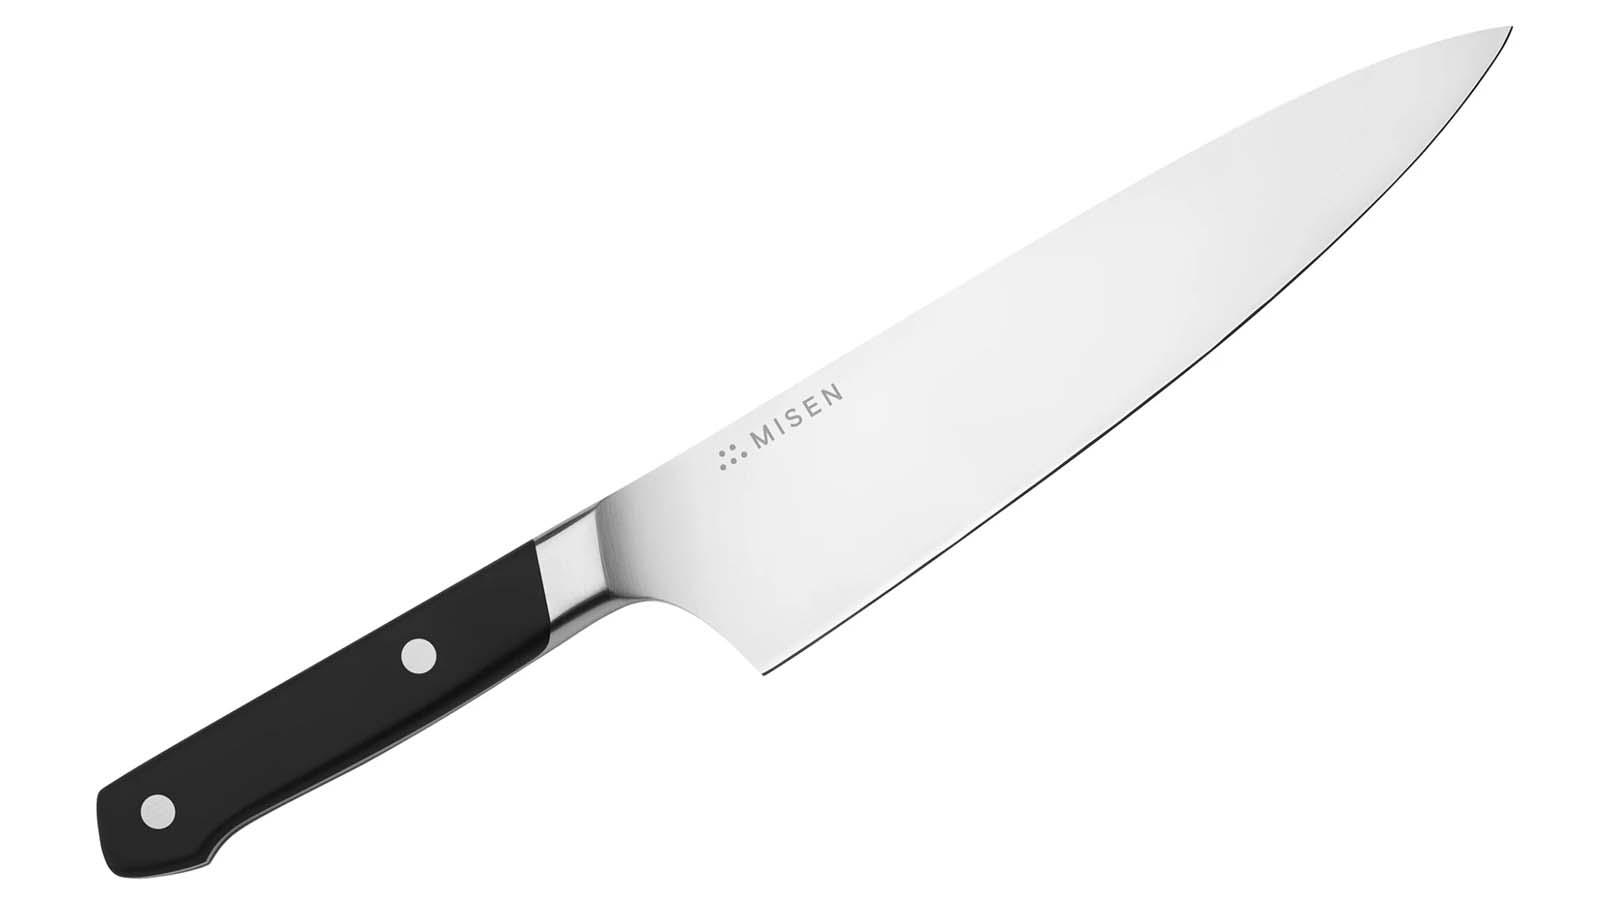 https://media.cnn.com/api/v1/images/stellar/prod/misen-chef-knife.jpg?q=h_900,w_1600,x_0,y_0